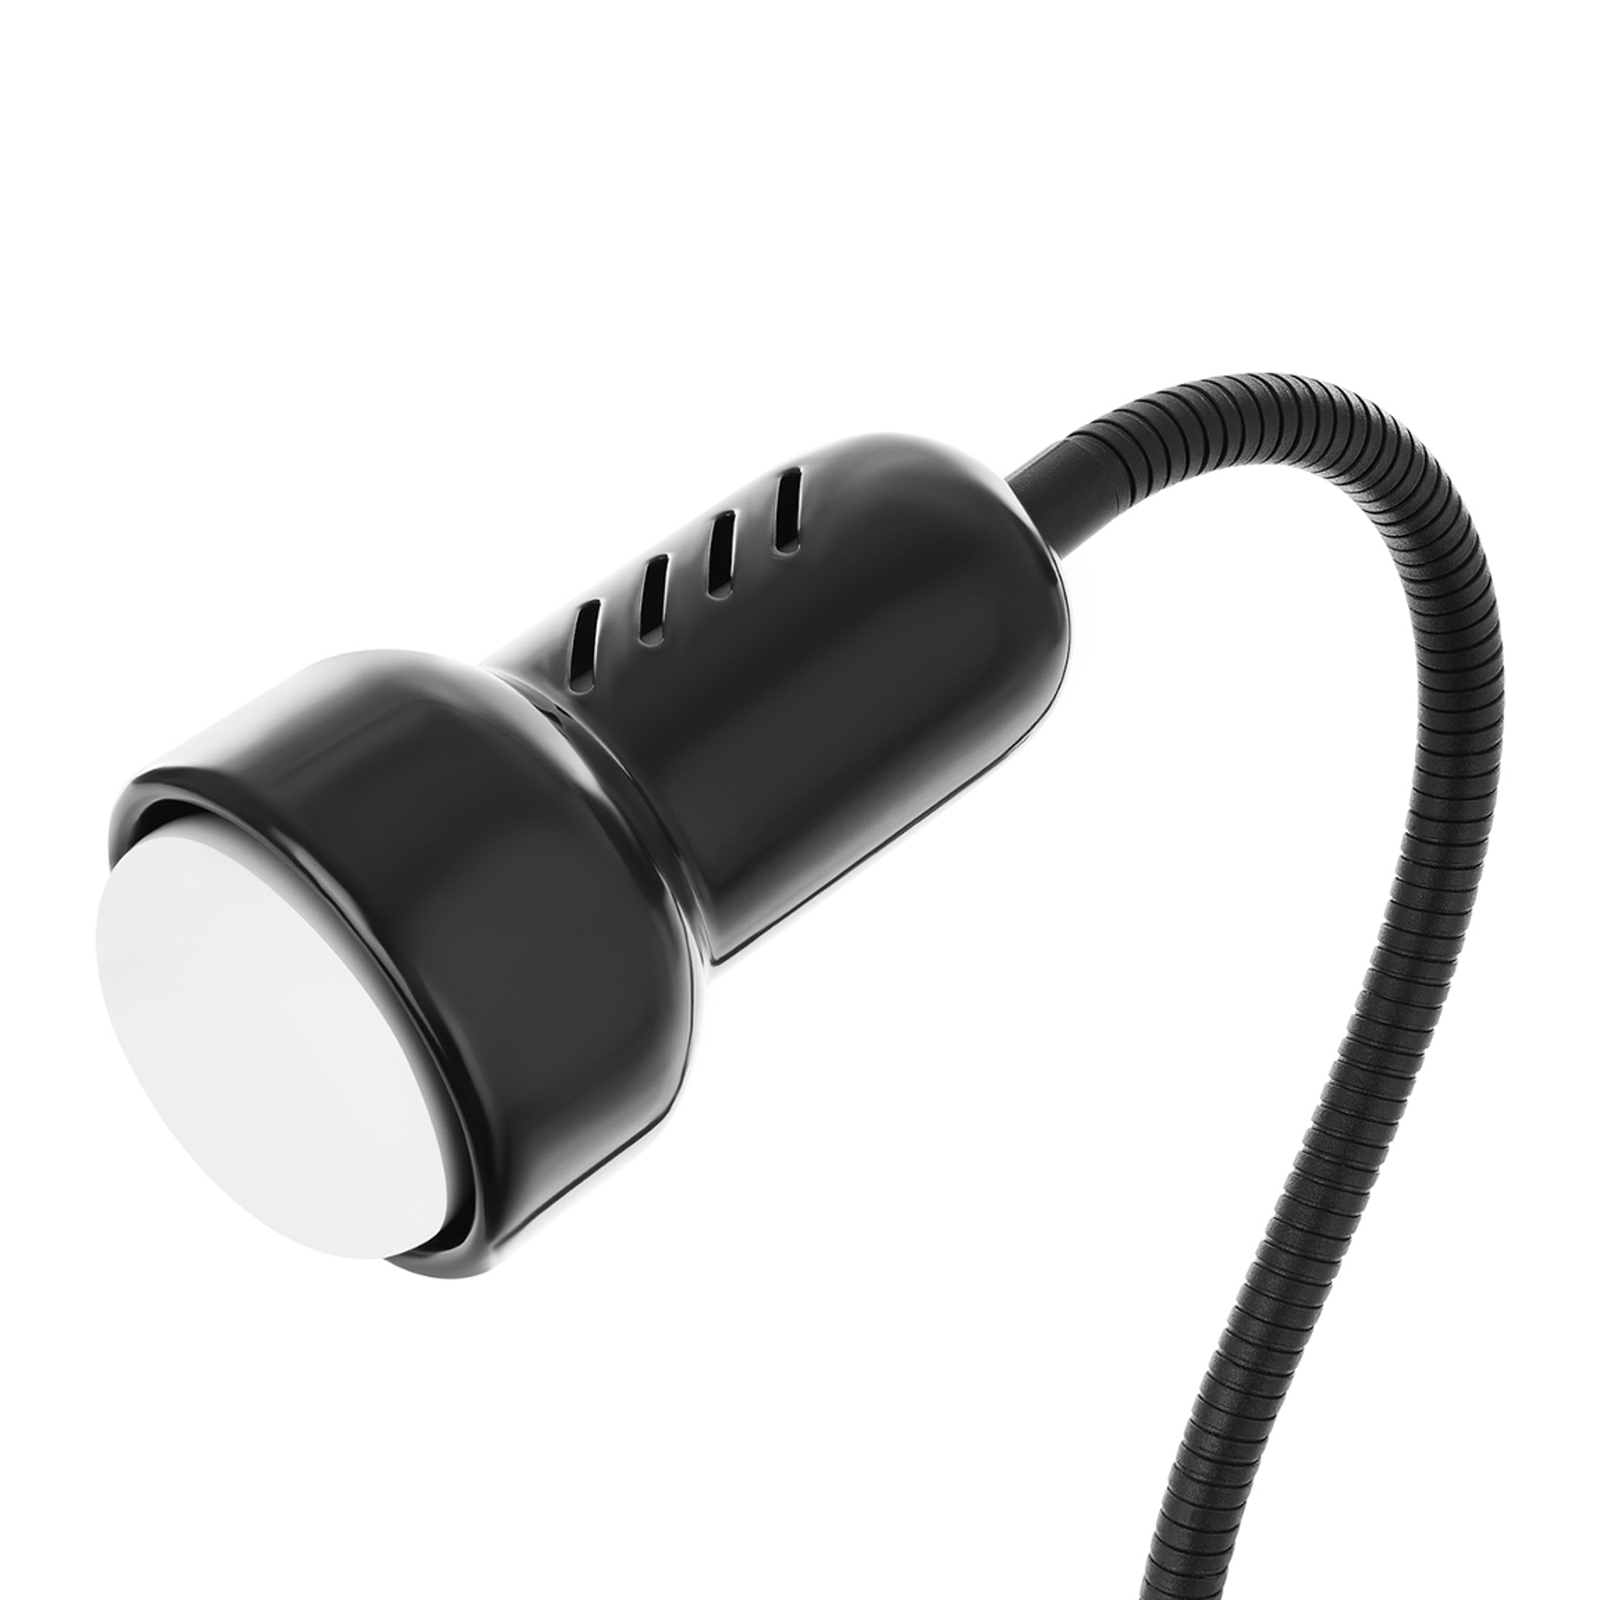 Lolek clip-on light with long flexible arm, black